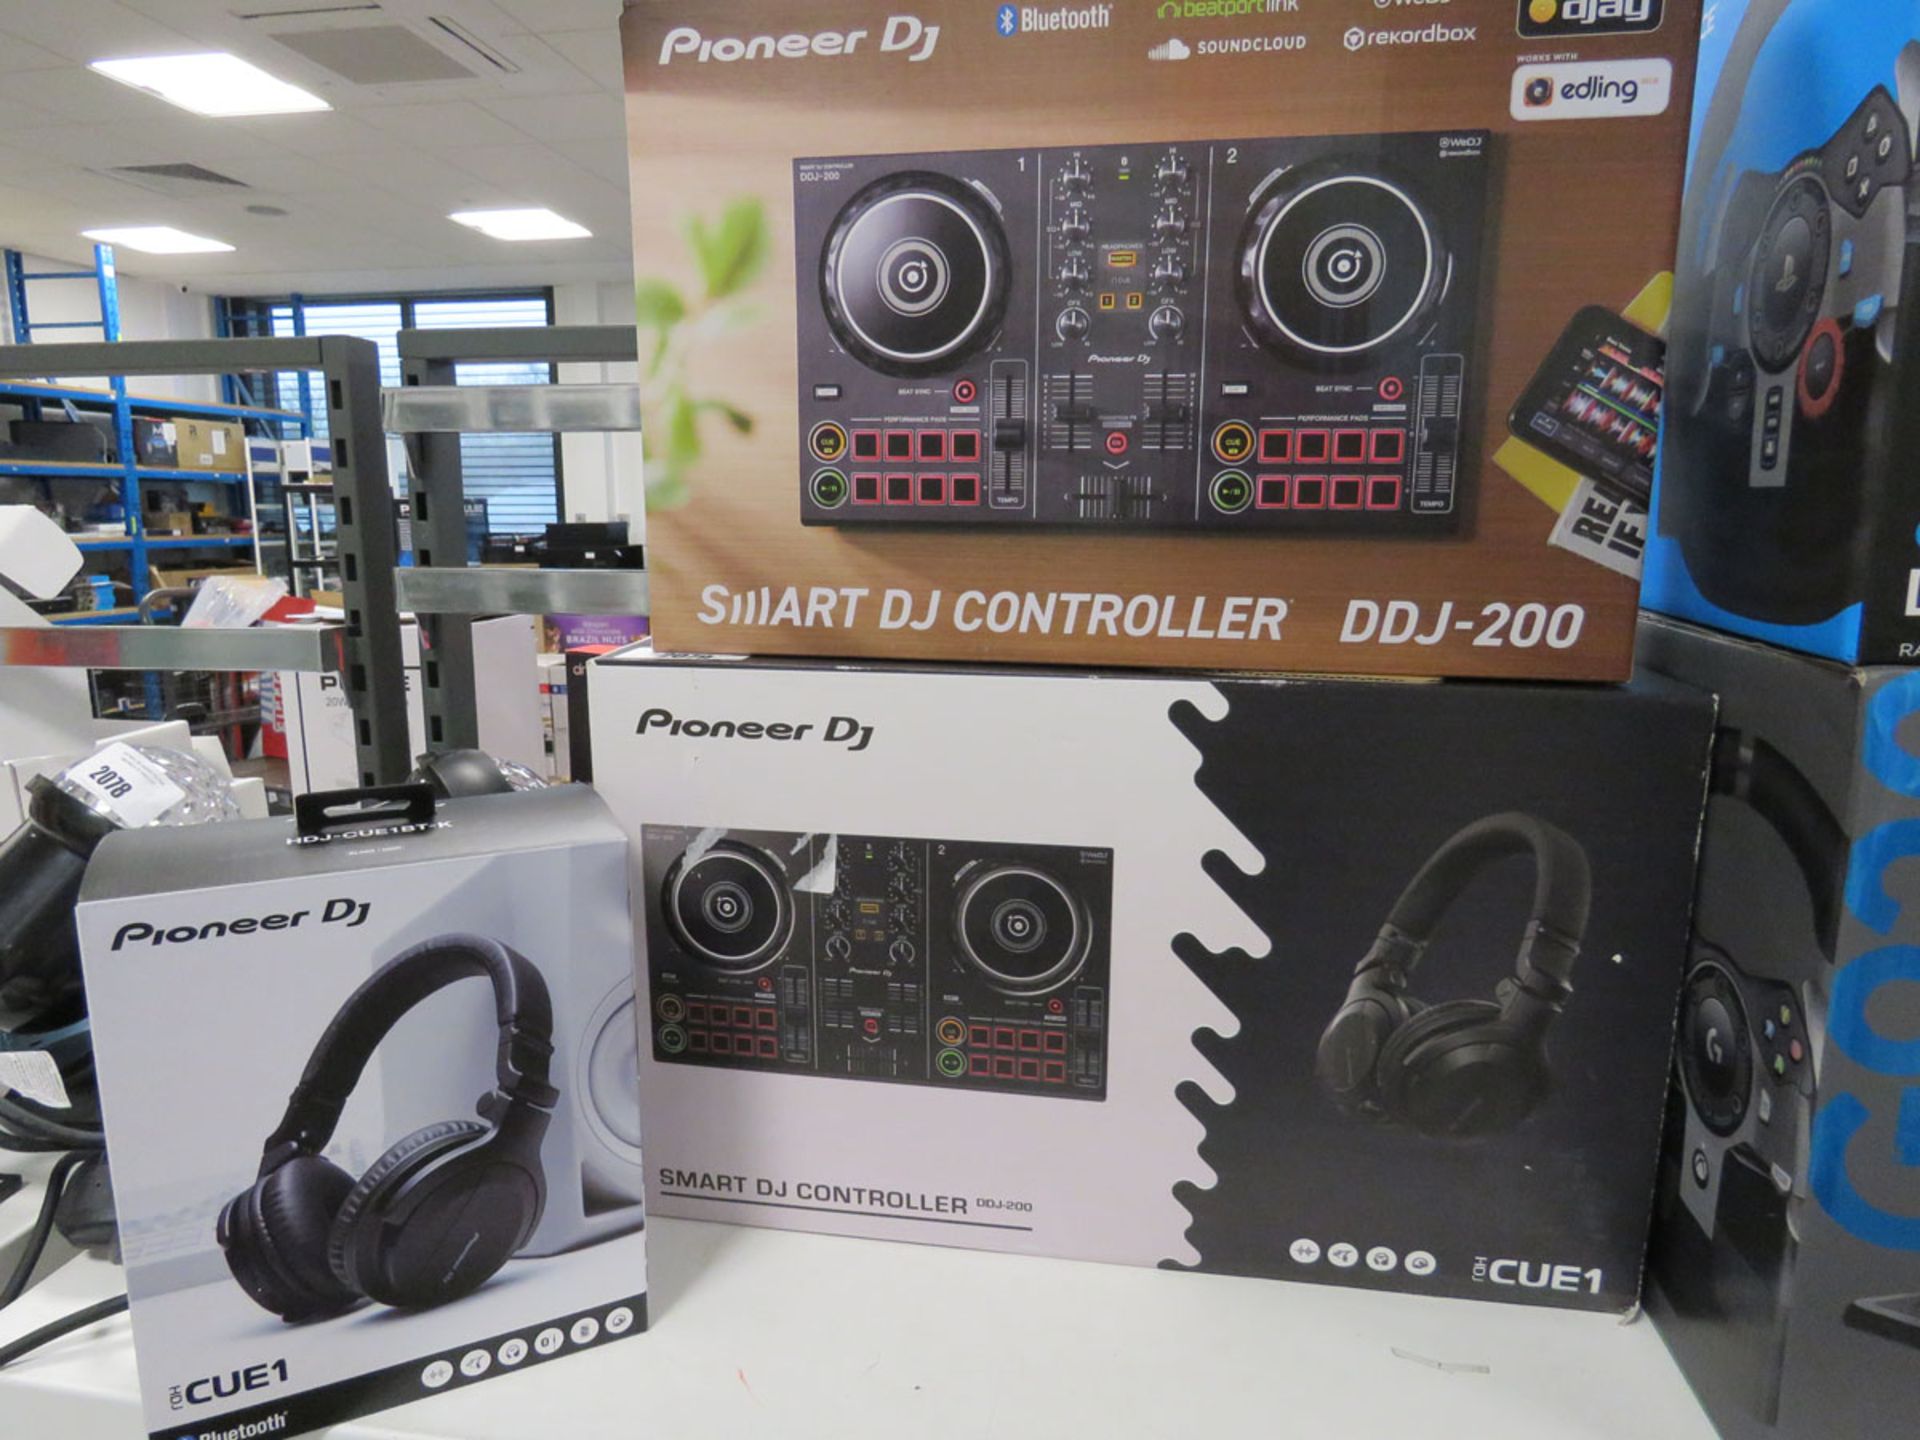 Pioneer Smart DJ controller model DDJ-200 with pair of HDJ Q1 headphones